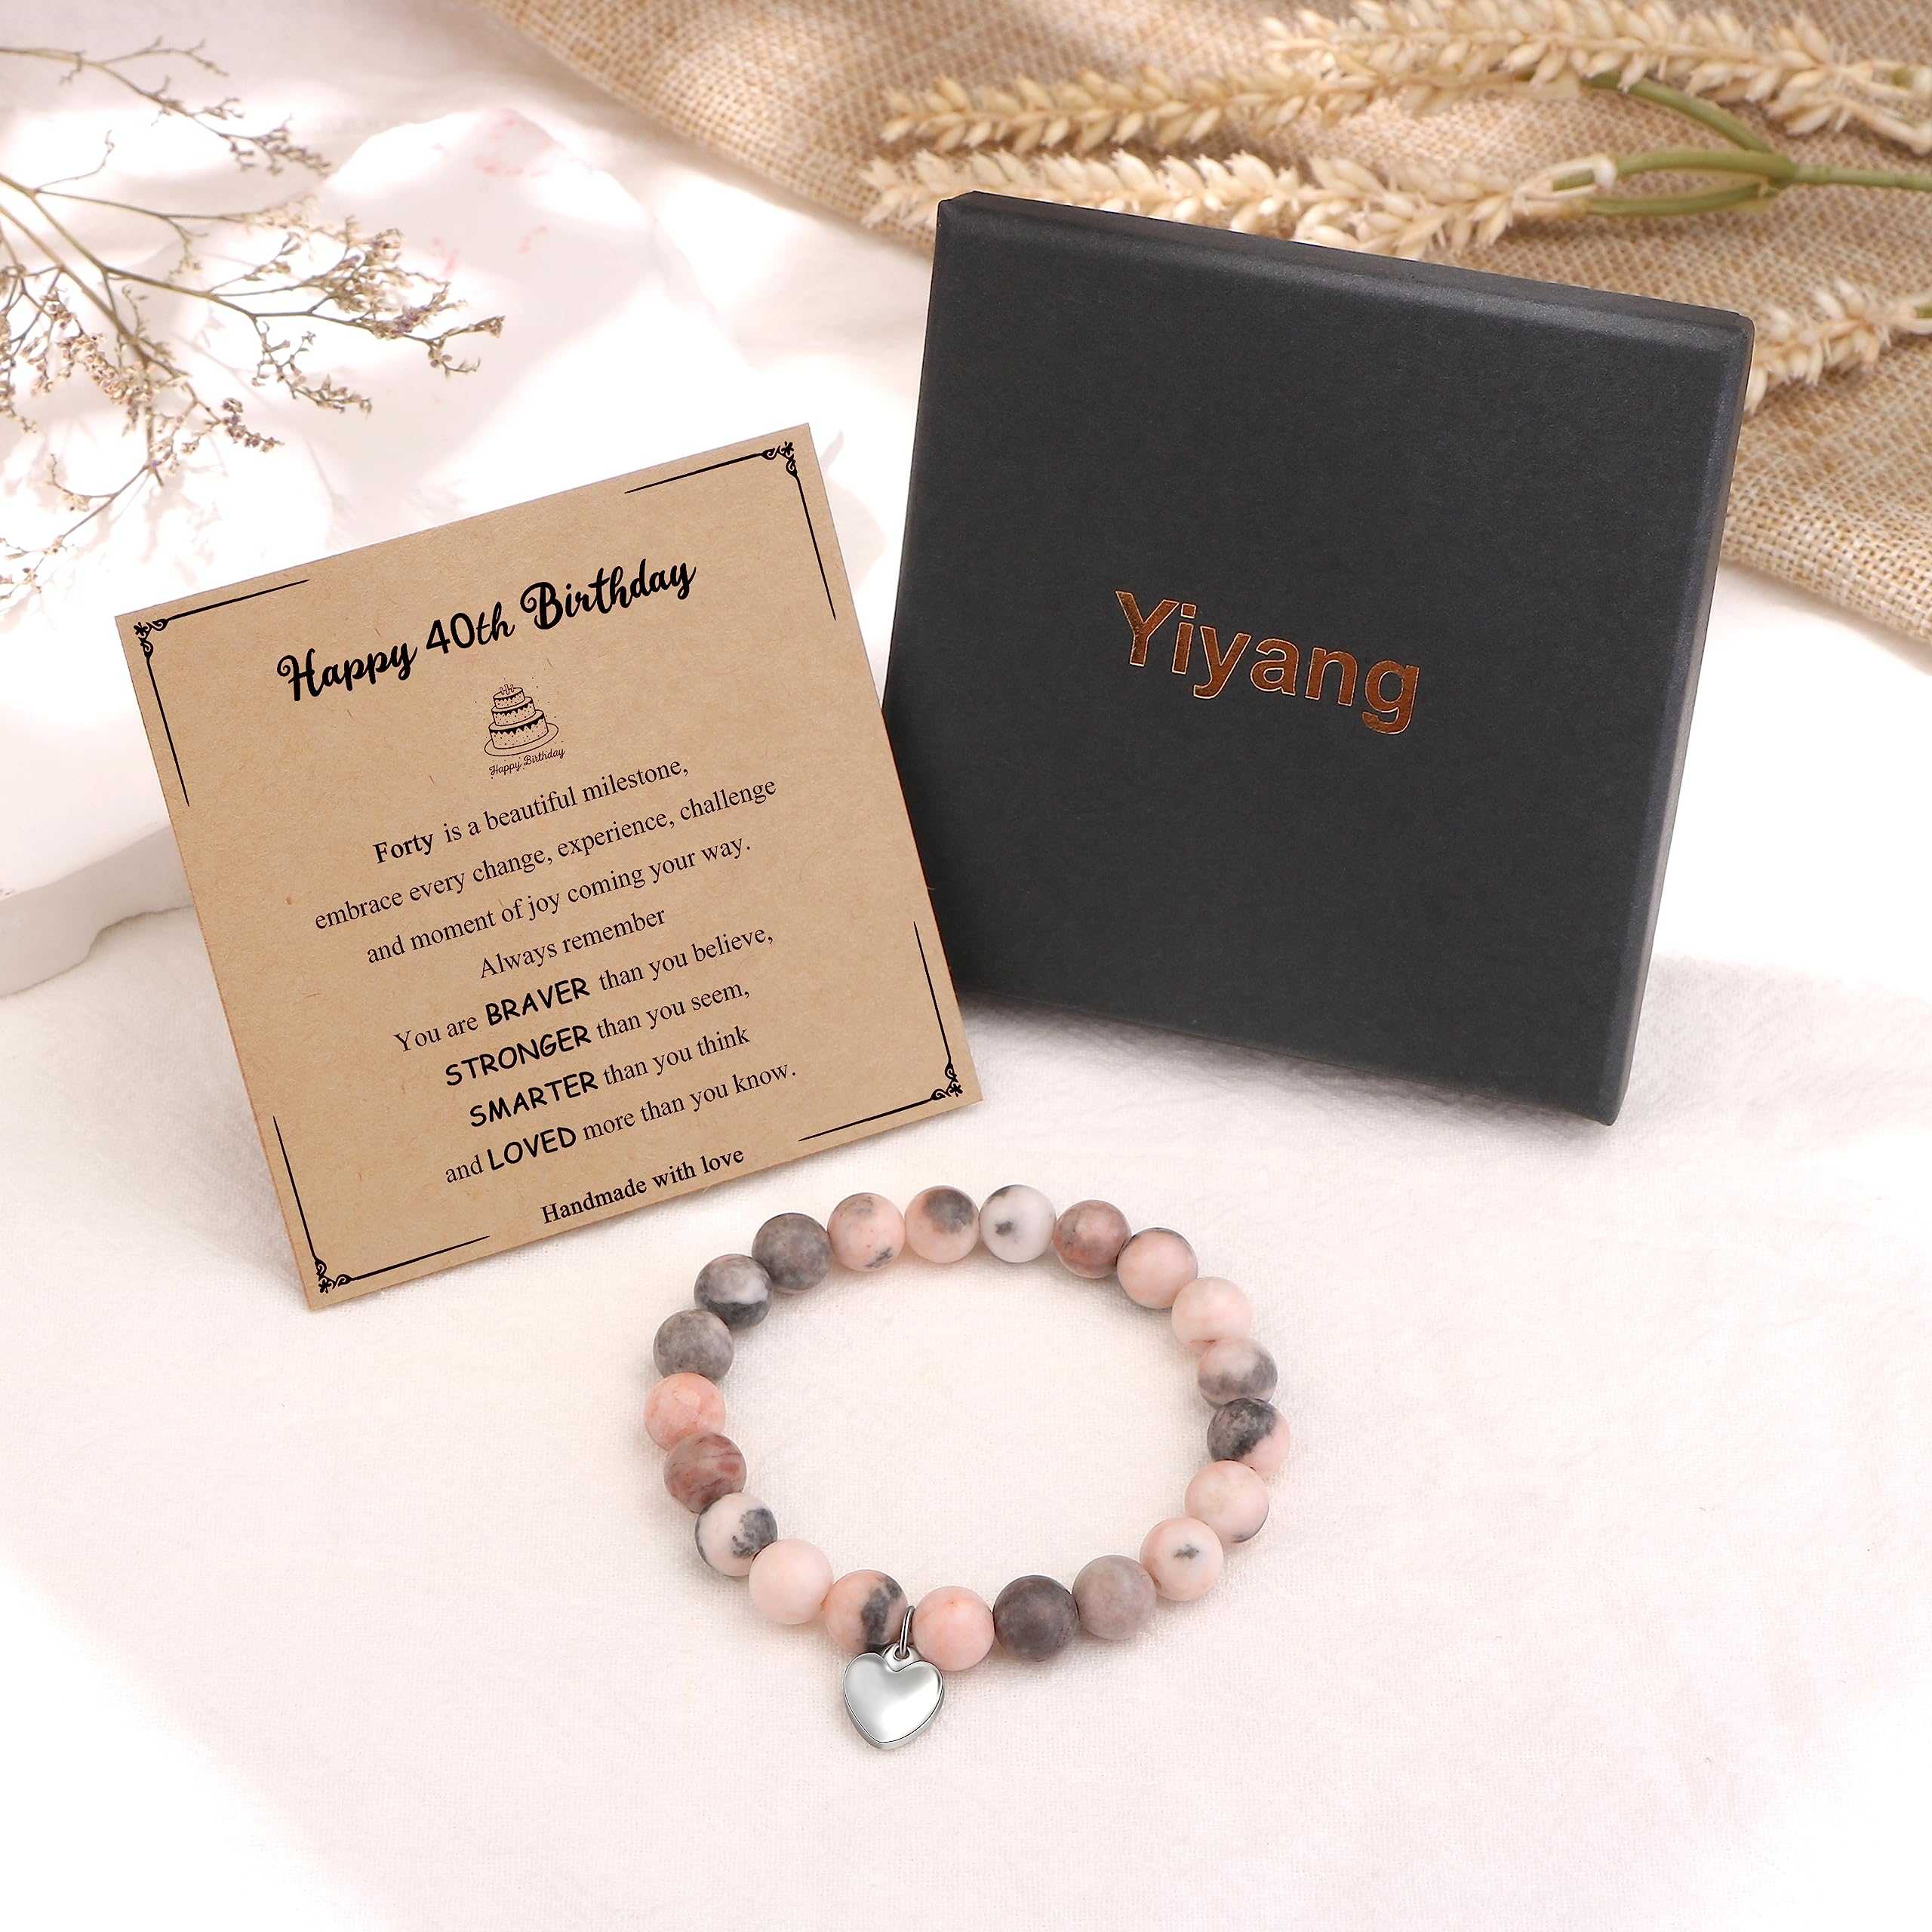 Yiyang 13th 16th 18th 21st 25th 30th 35th 40th 45th 50th 60th 65th 70th 75th 80th Birthday Gifts for Women Girls, Natural Stone Bracelet Birthday Gifts for Women Daughter Mom Sister Grandma